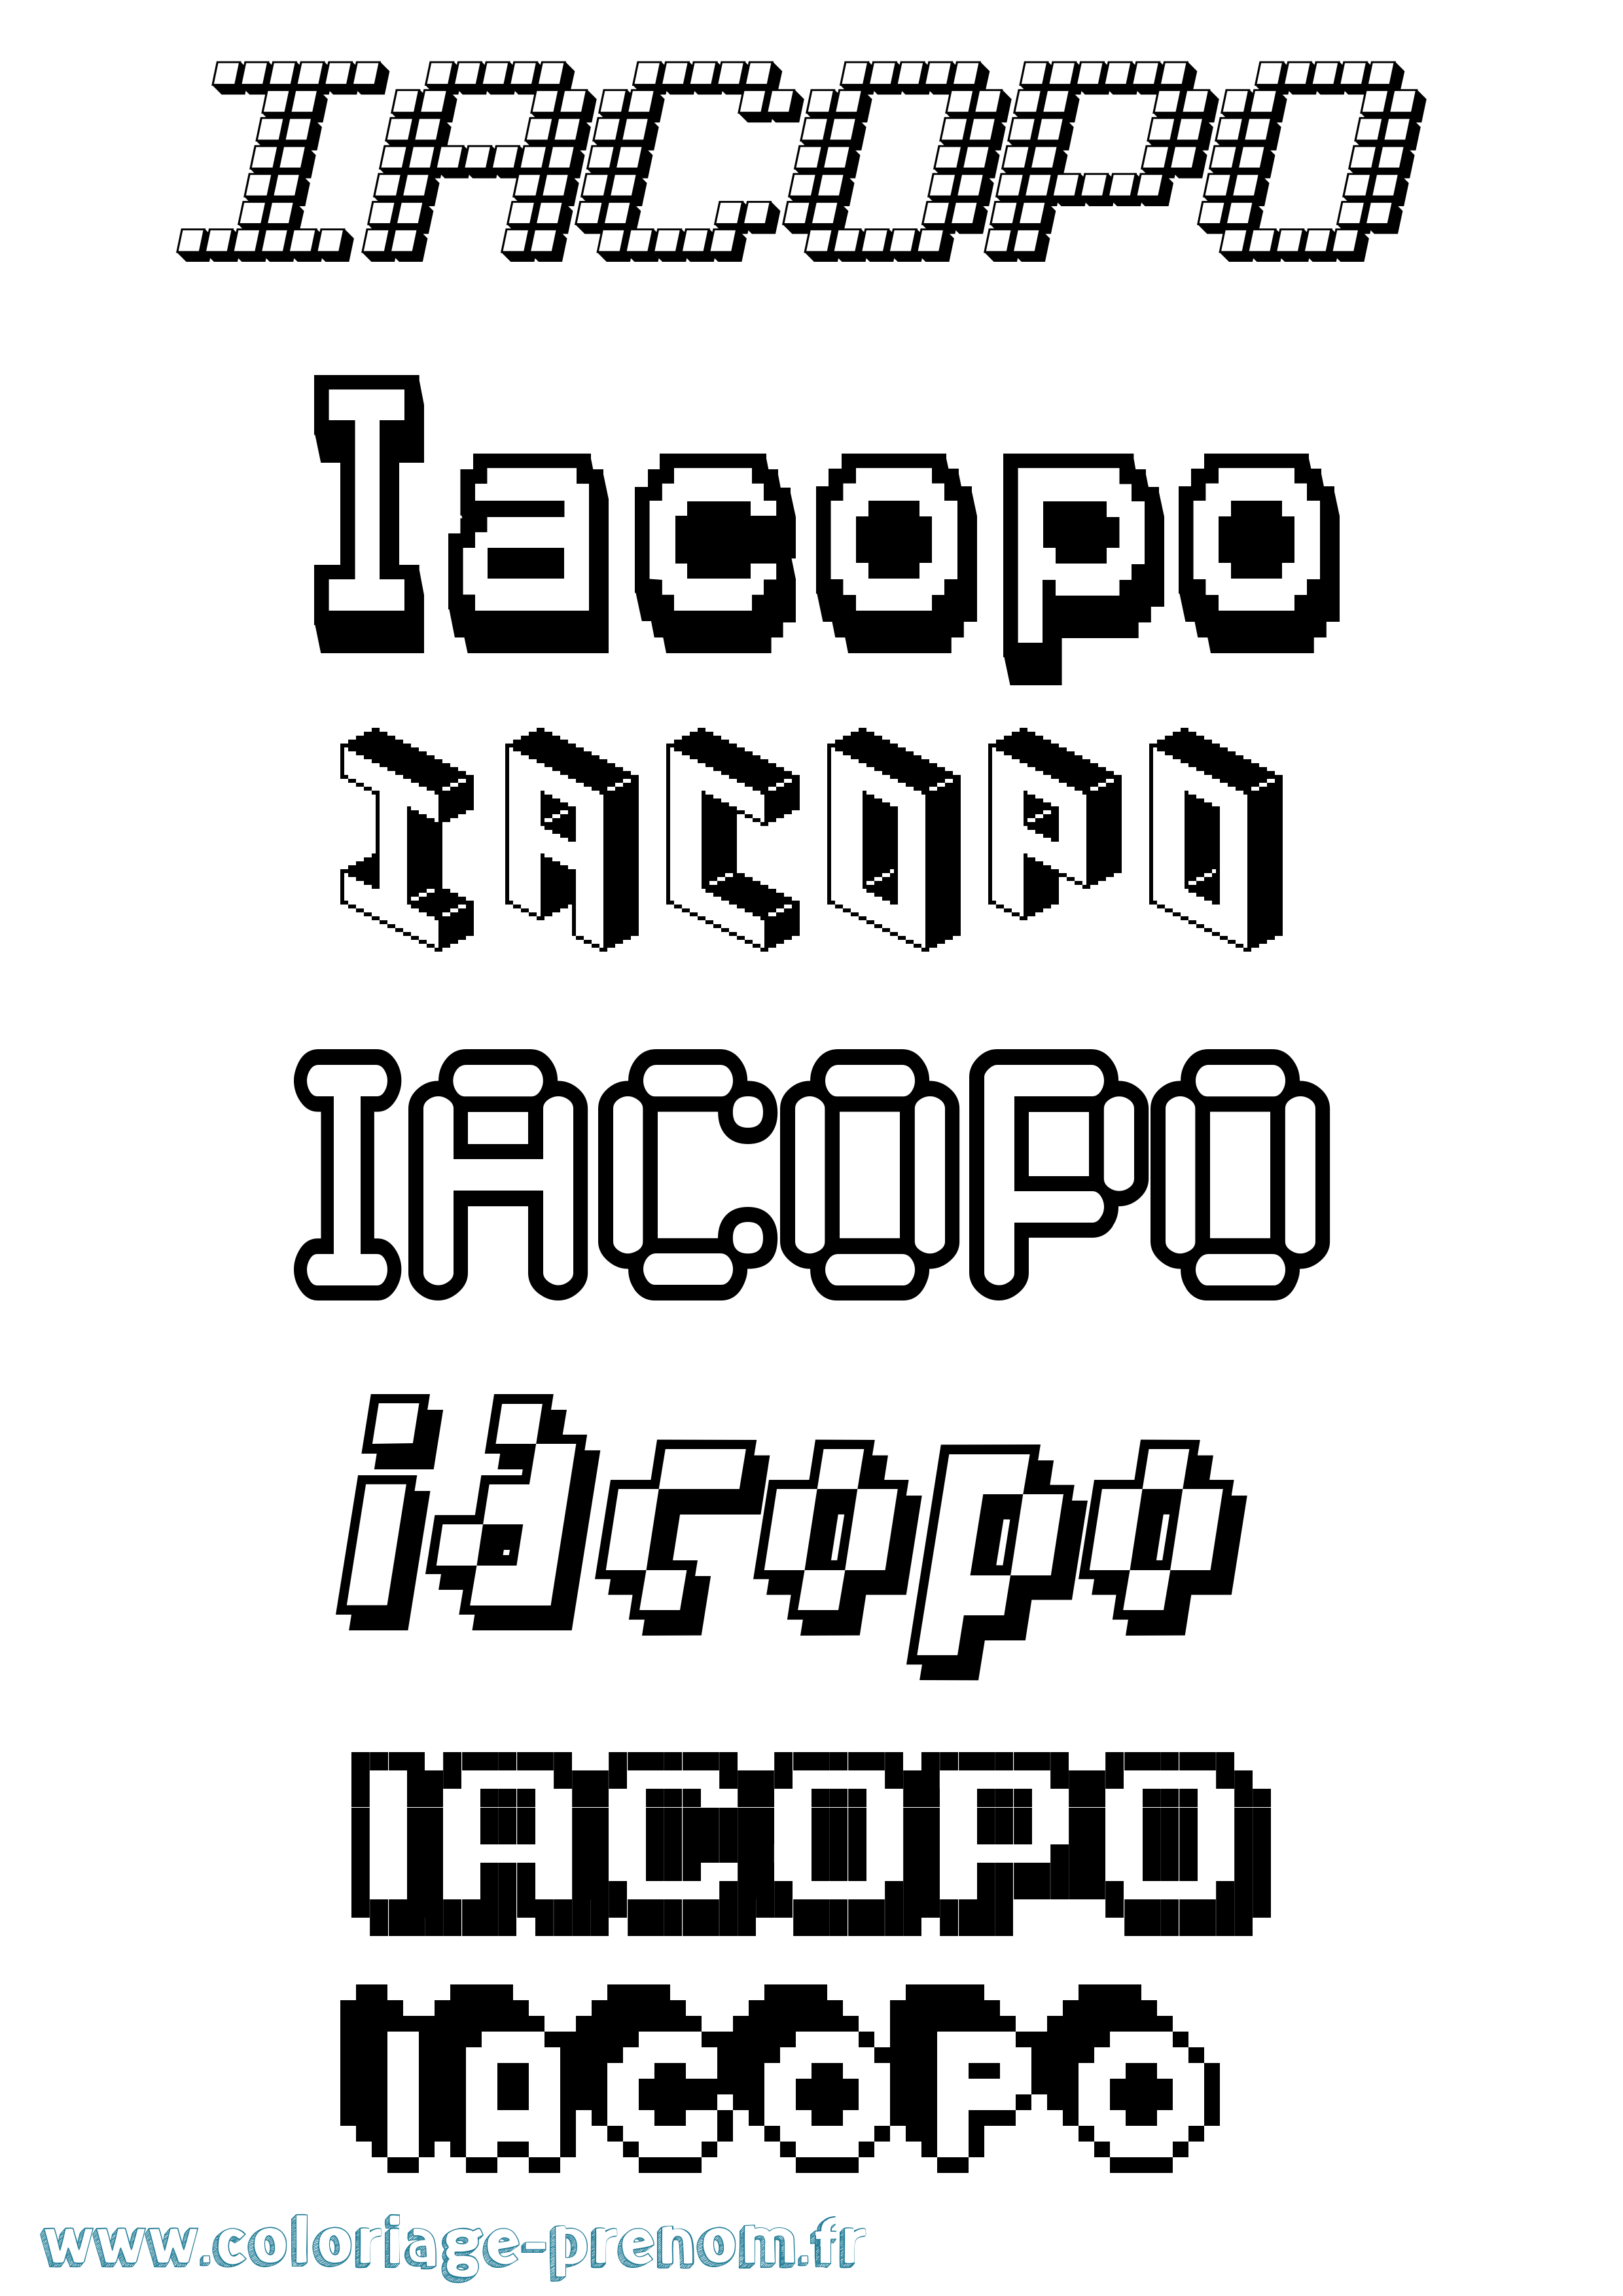 Coloriage prénom Iacopo Pixel